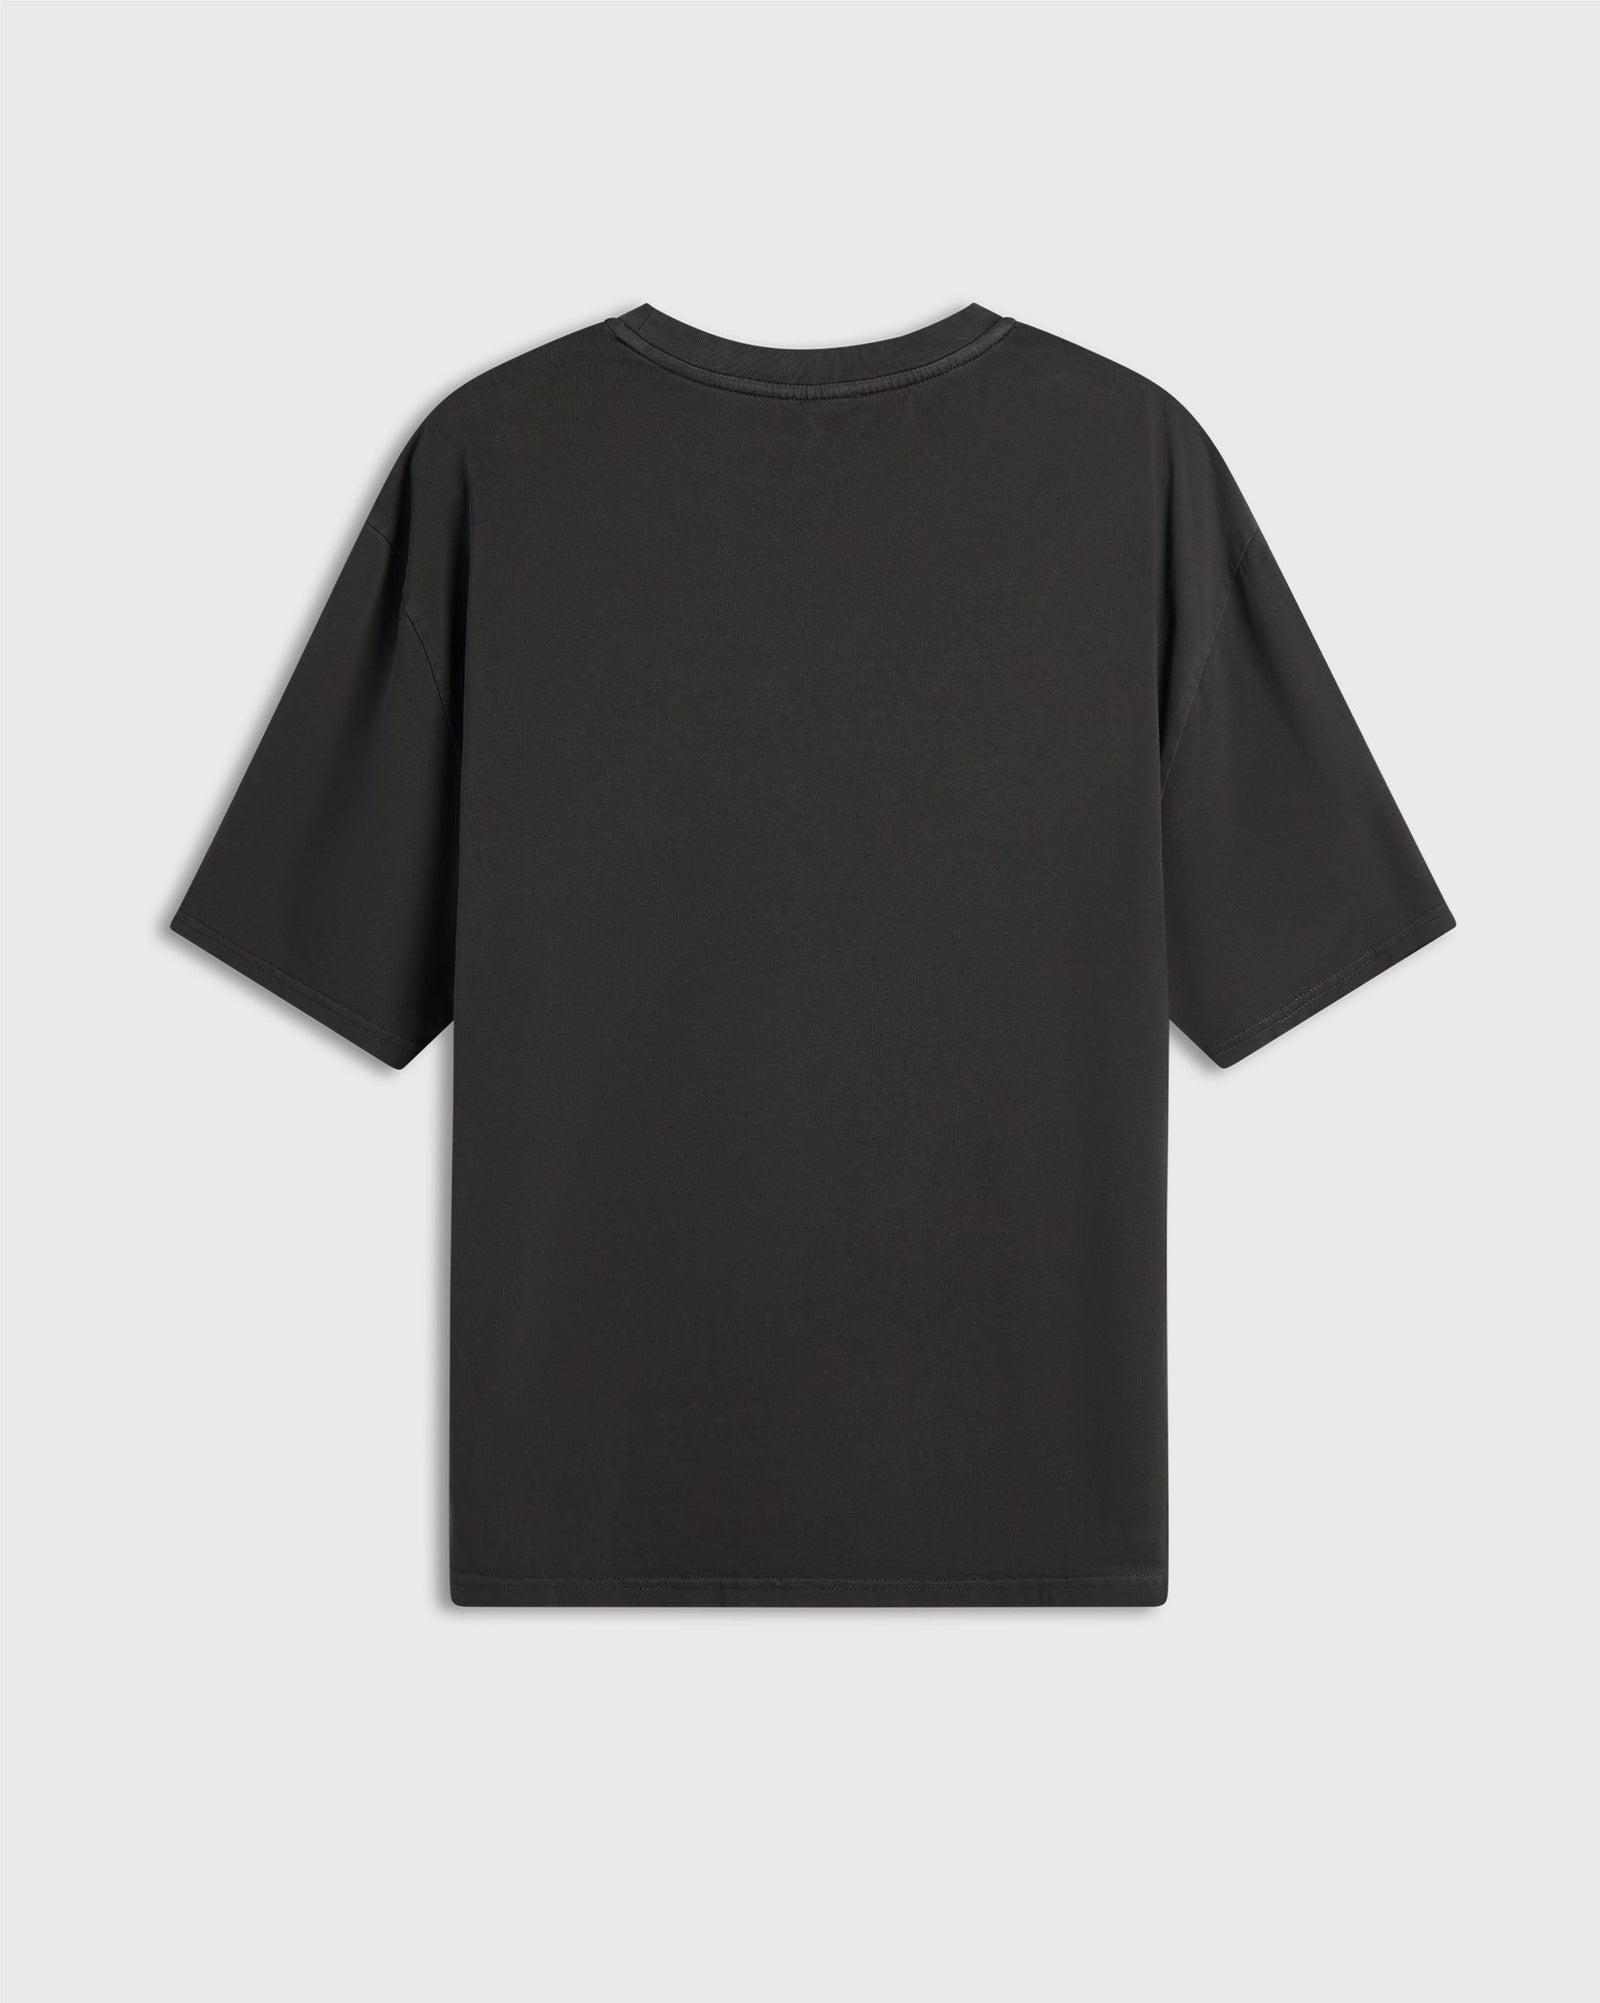 Black graphic short sleeve- unisex fashion tops for men & women by Krost.